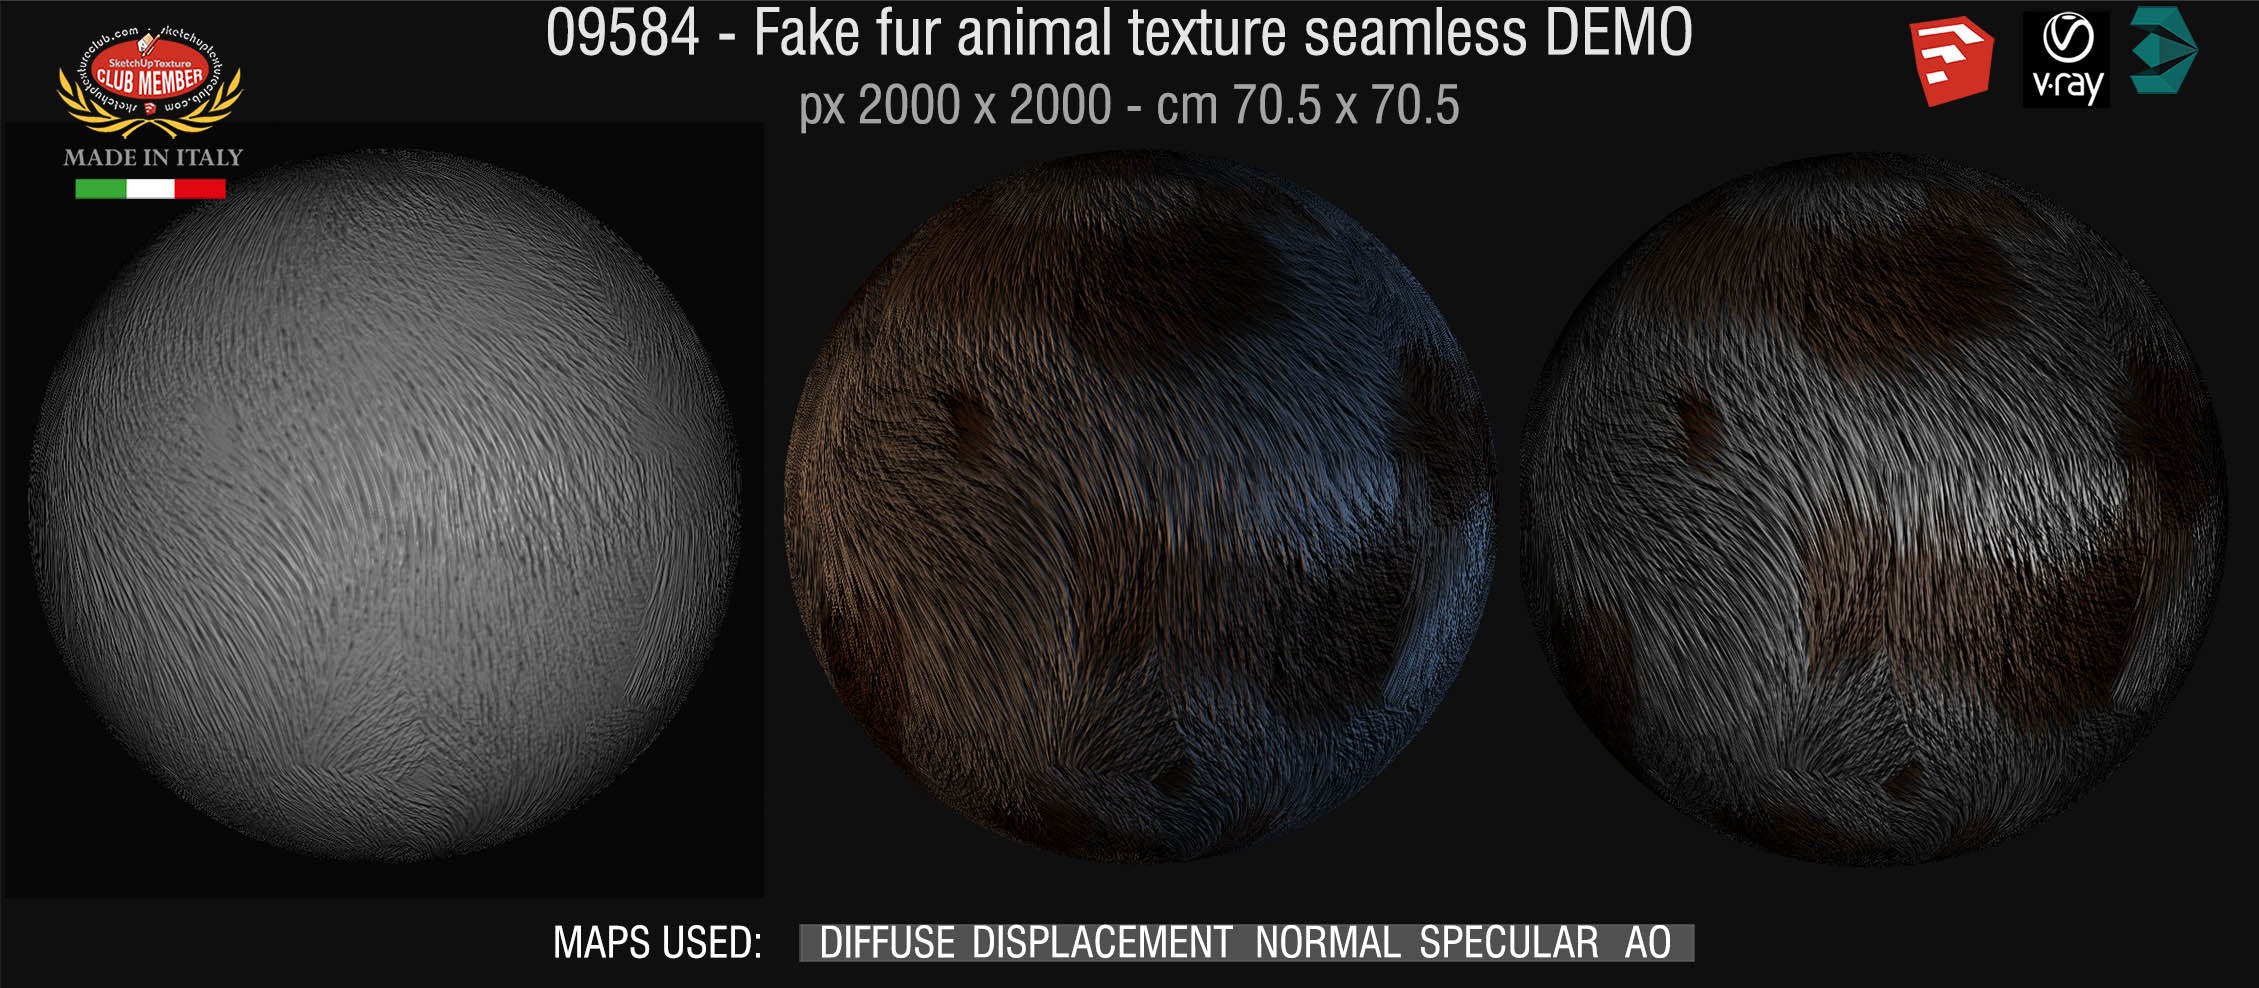 09584 HR fake fur animal texture seamless + maps DEMO